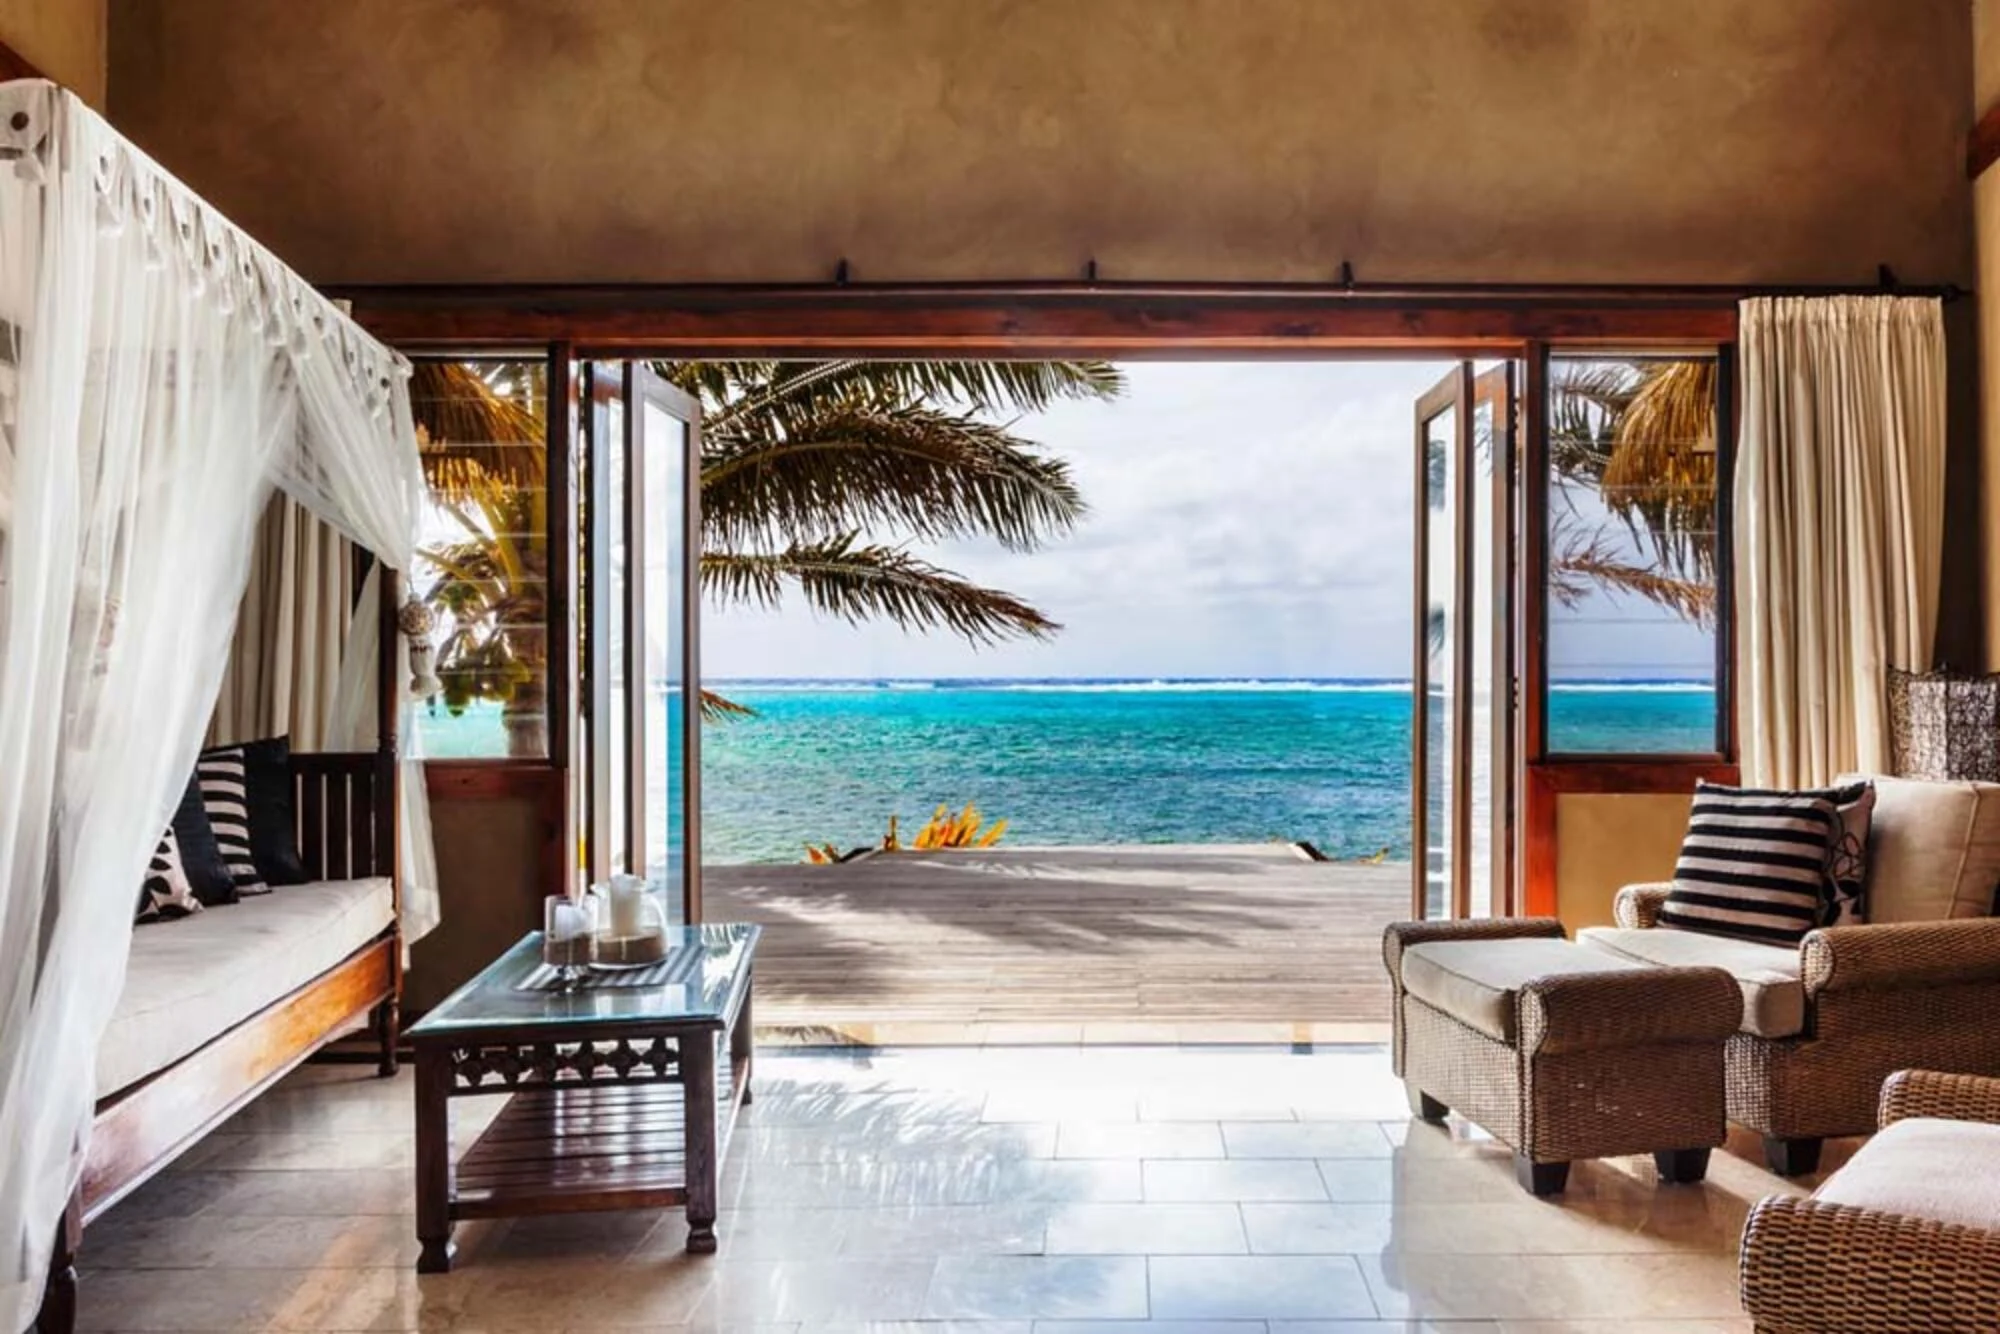 Rumours Luxury Villas in Cook Islands, Australia and Oceania | SPAs - Rated 0.9